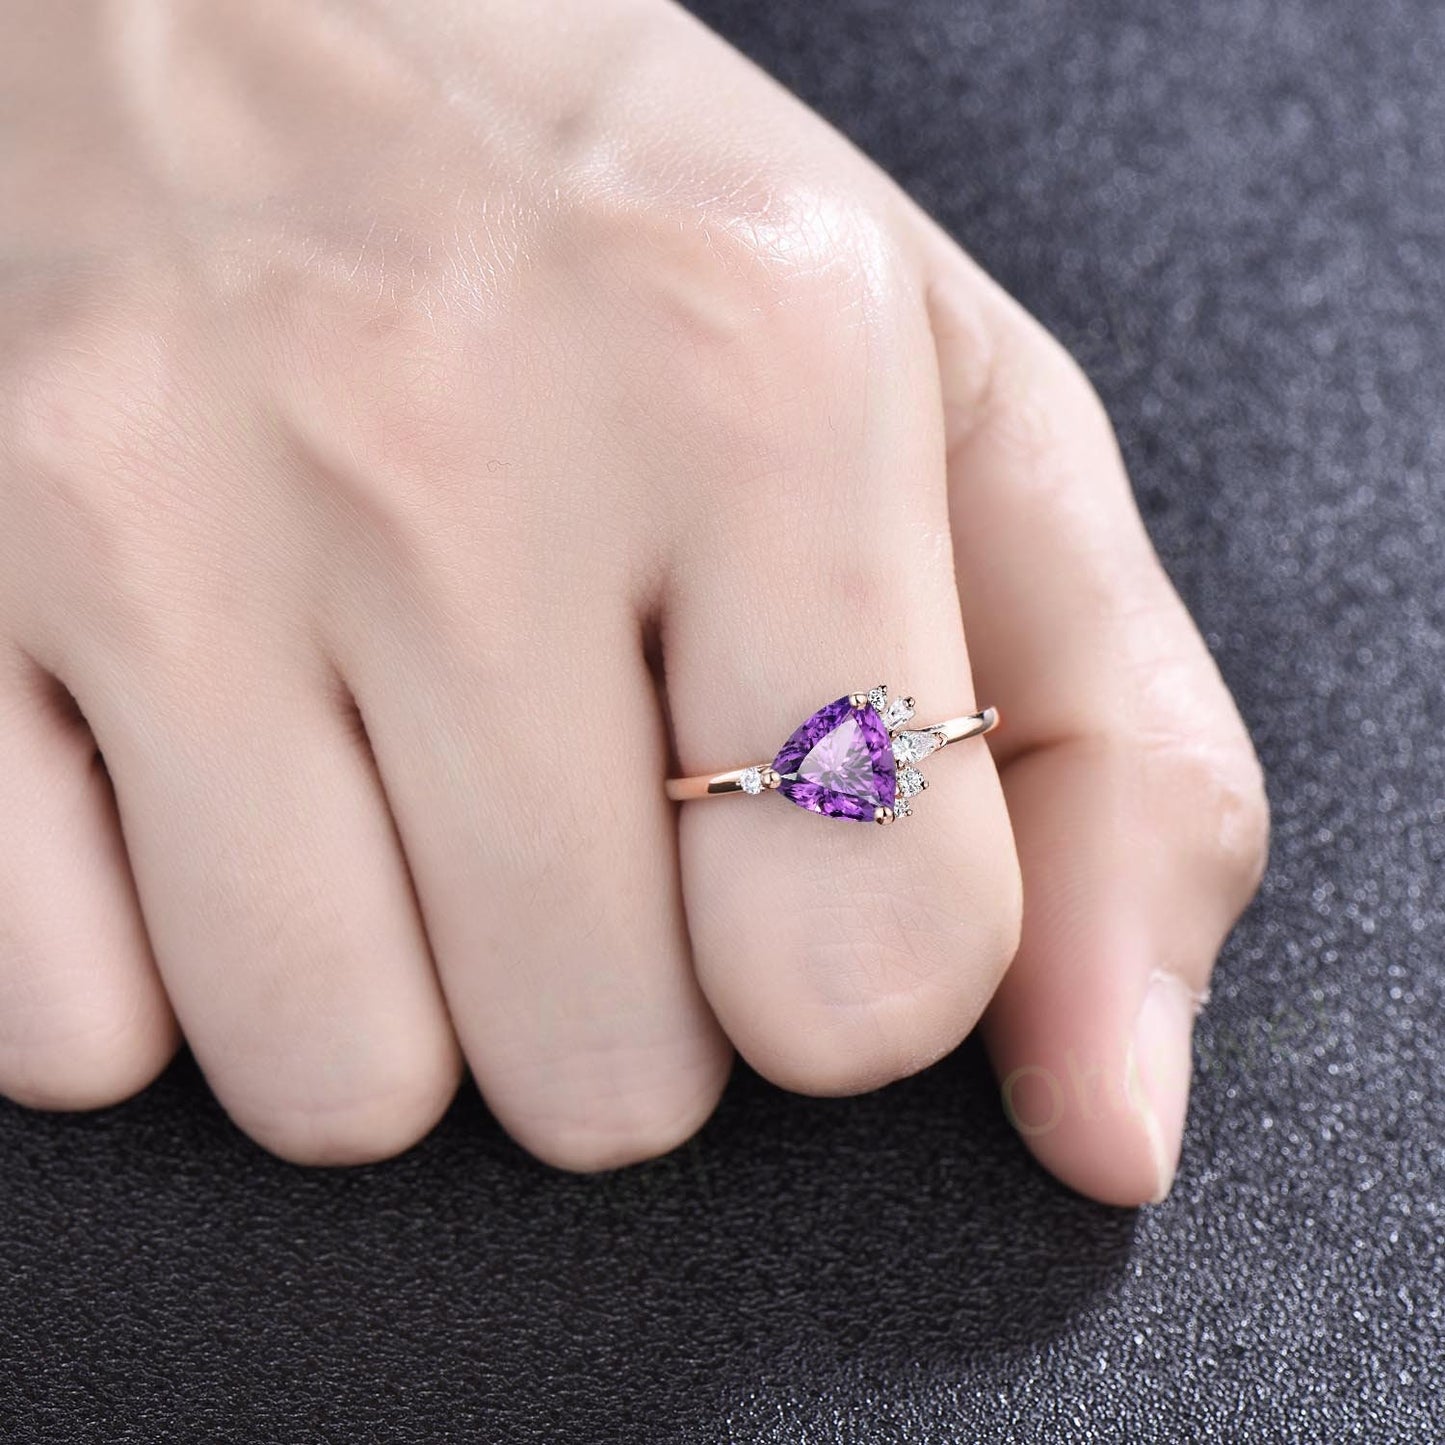 Purple amethyst ring vintage Trilliant cut Amethyst engagement ring cluster moissanite ring 14k rose gold dainty wedding bridal ring women